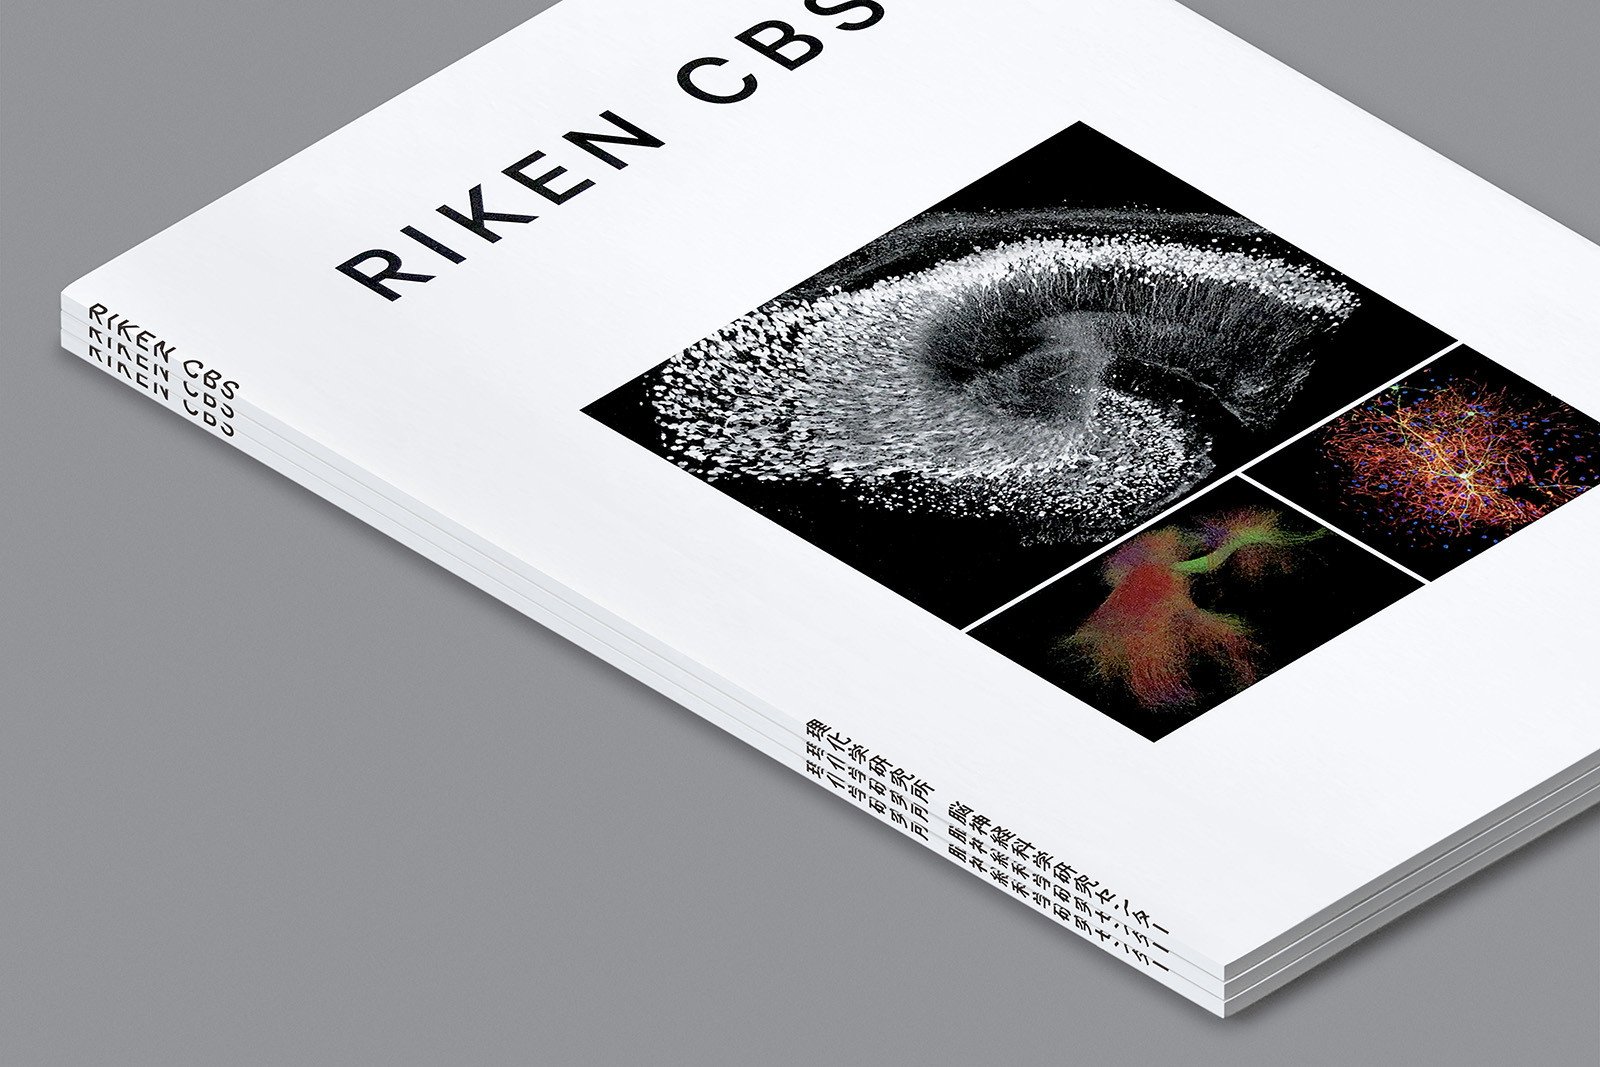 RIKEN-CBS-2.jpg